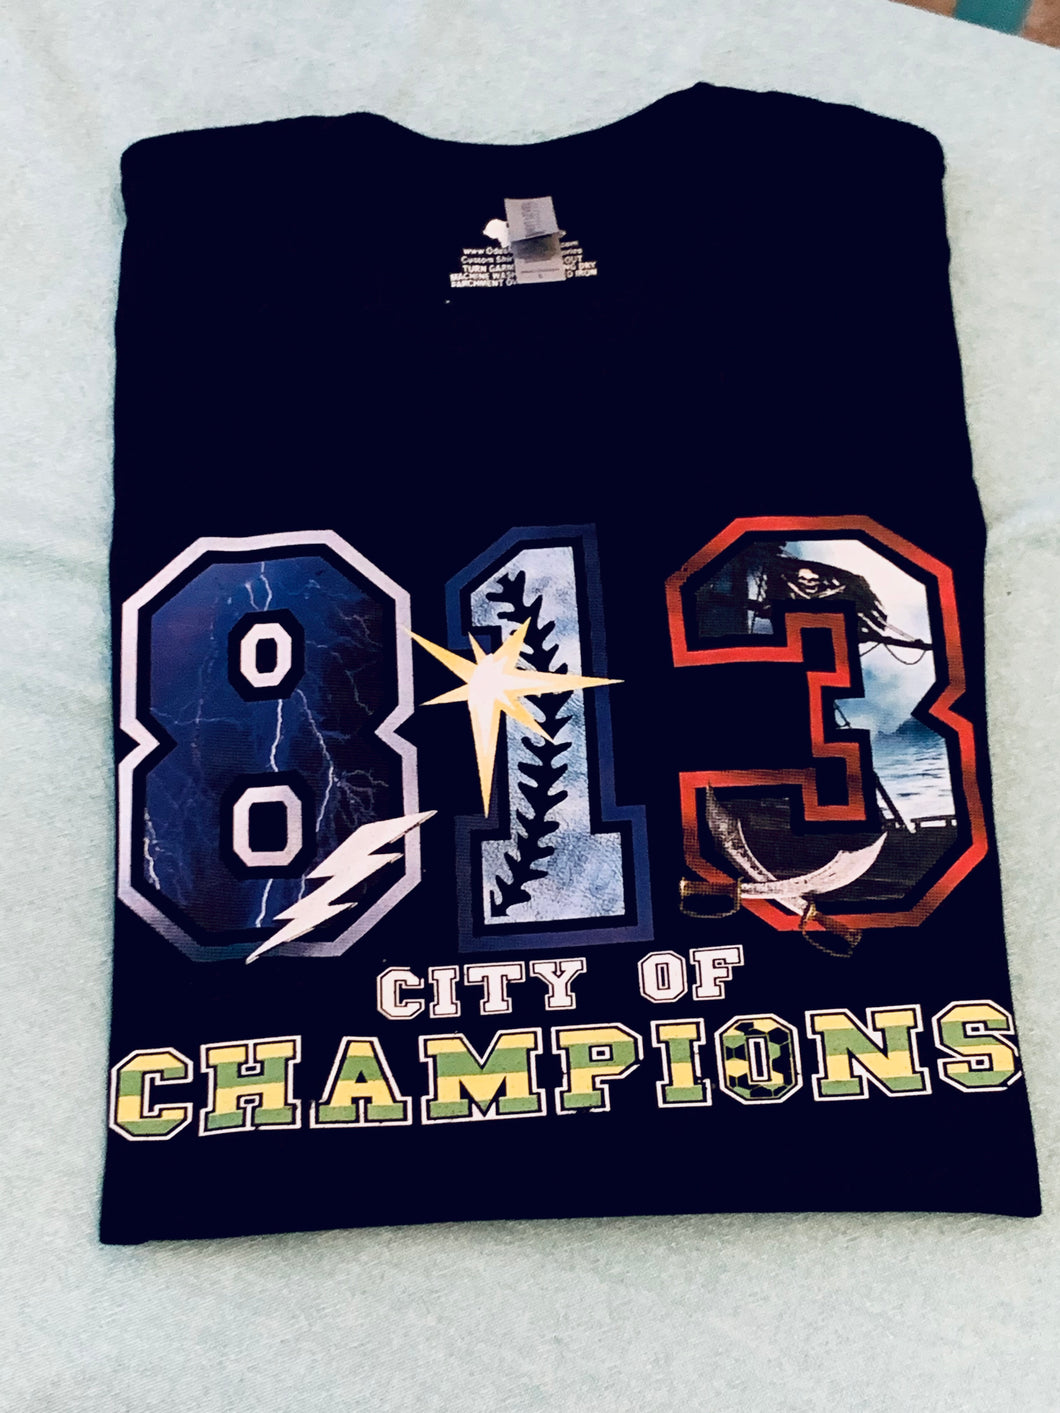 813 City of Champions -Tampa